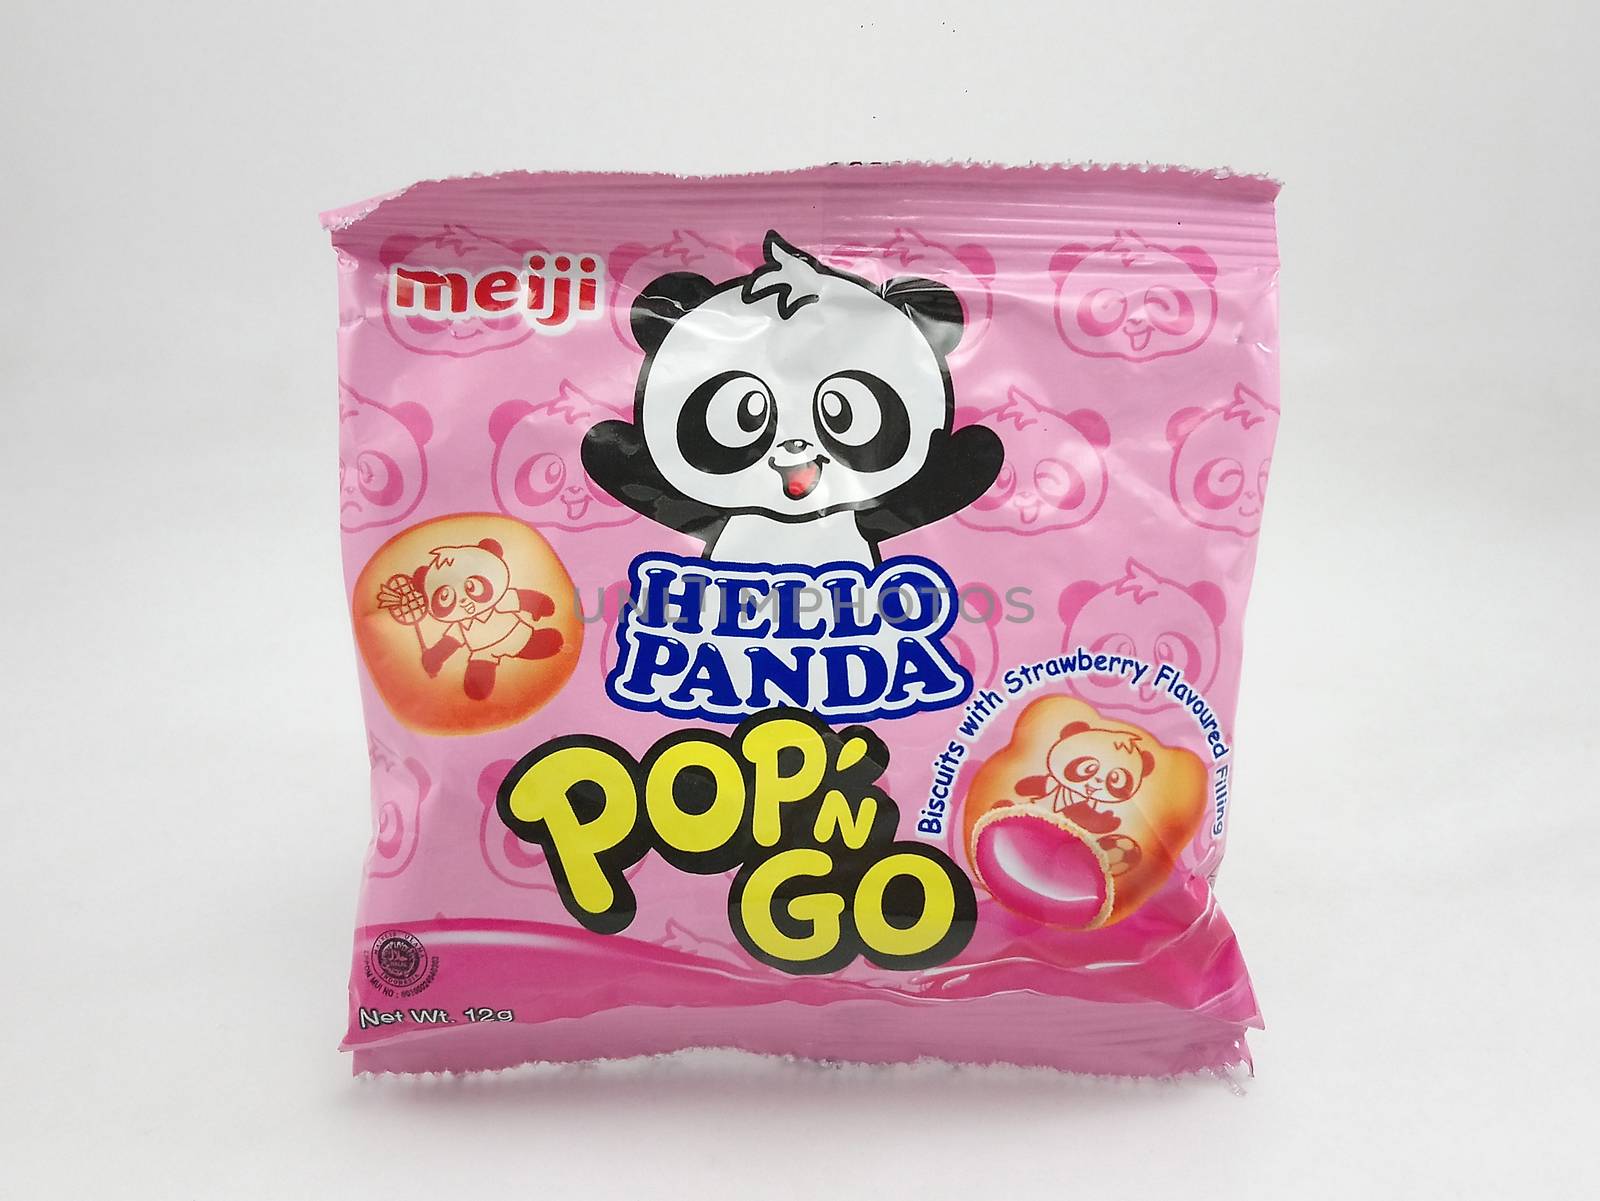 MANILA, PH - SEPT 22 - Meiji hello panda pop n go strawberry on September 22, 2020 in Manila, Philippines.